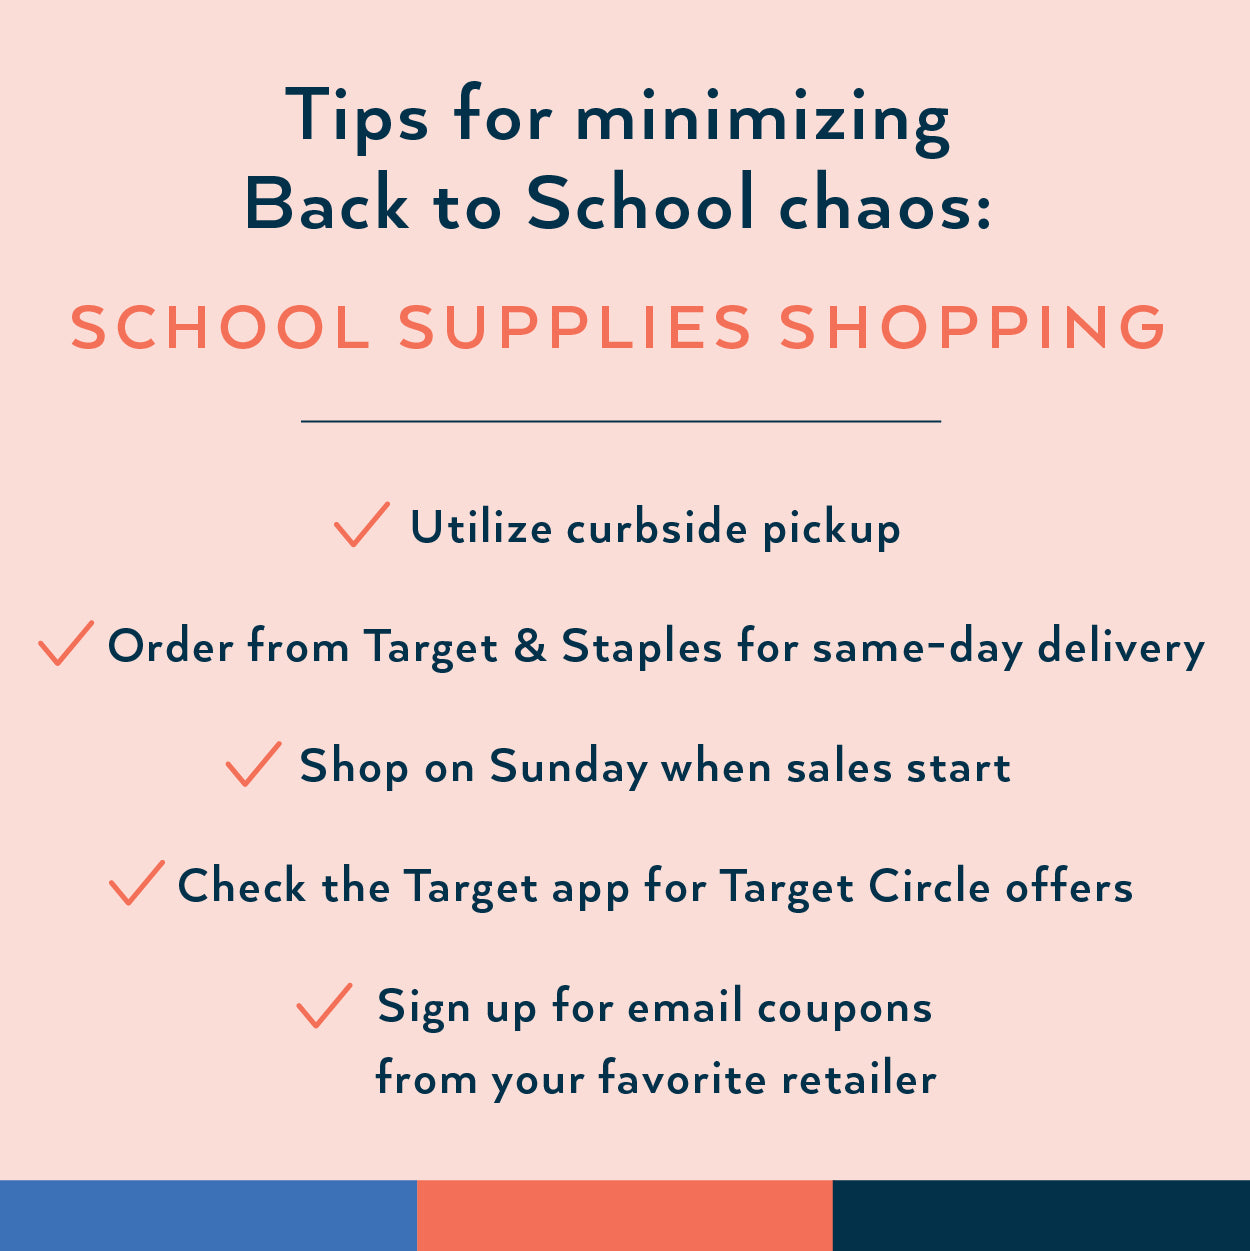 Minimize school supplies shopping